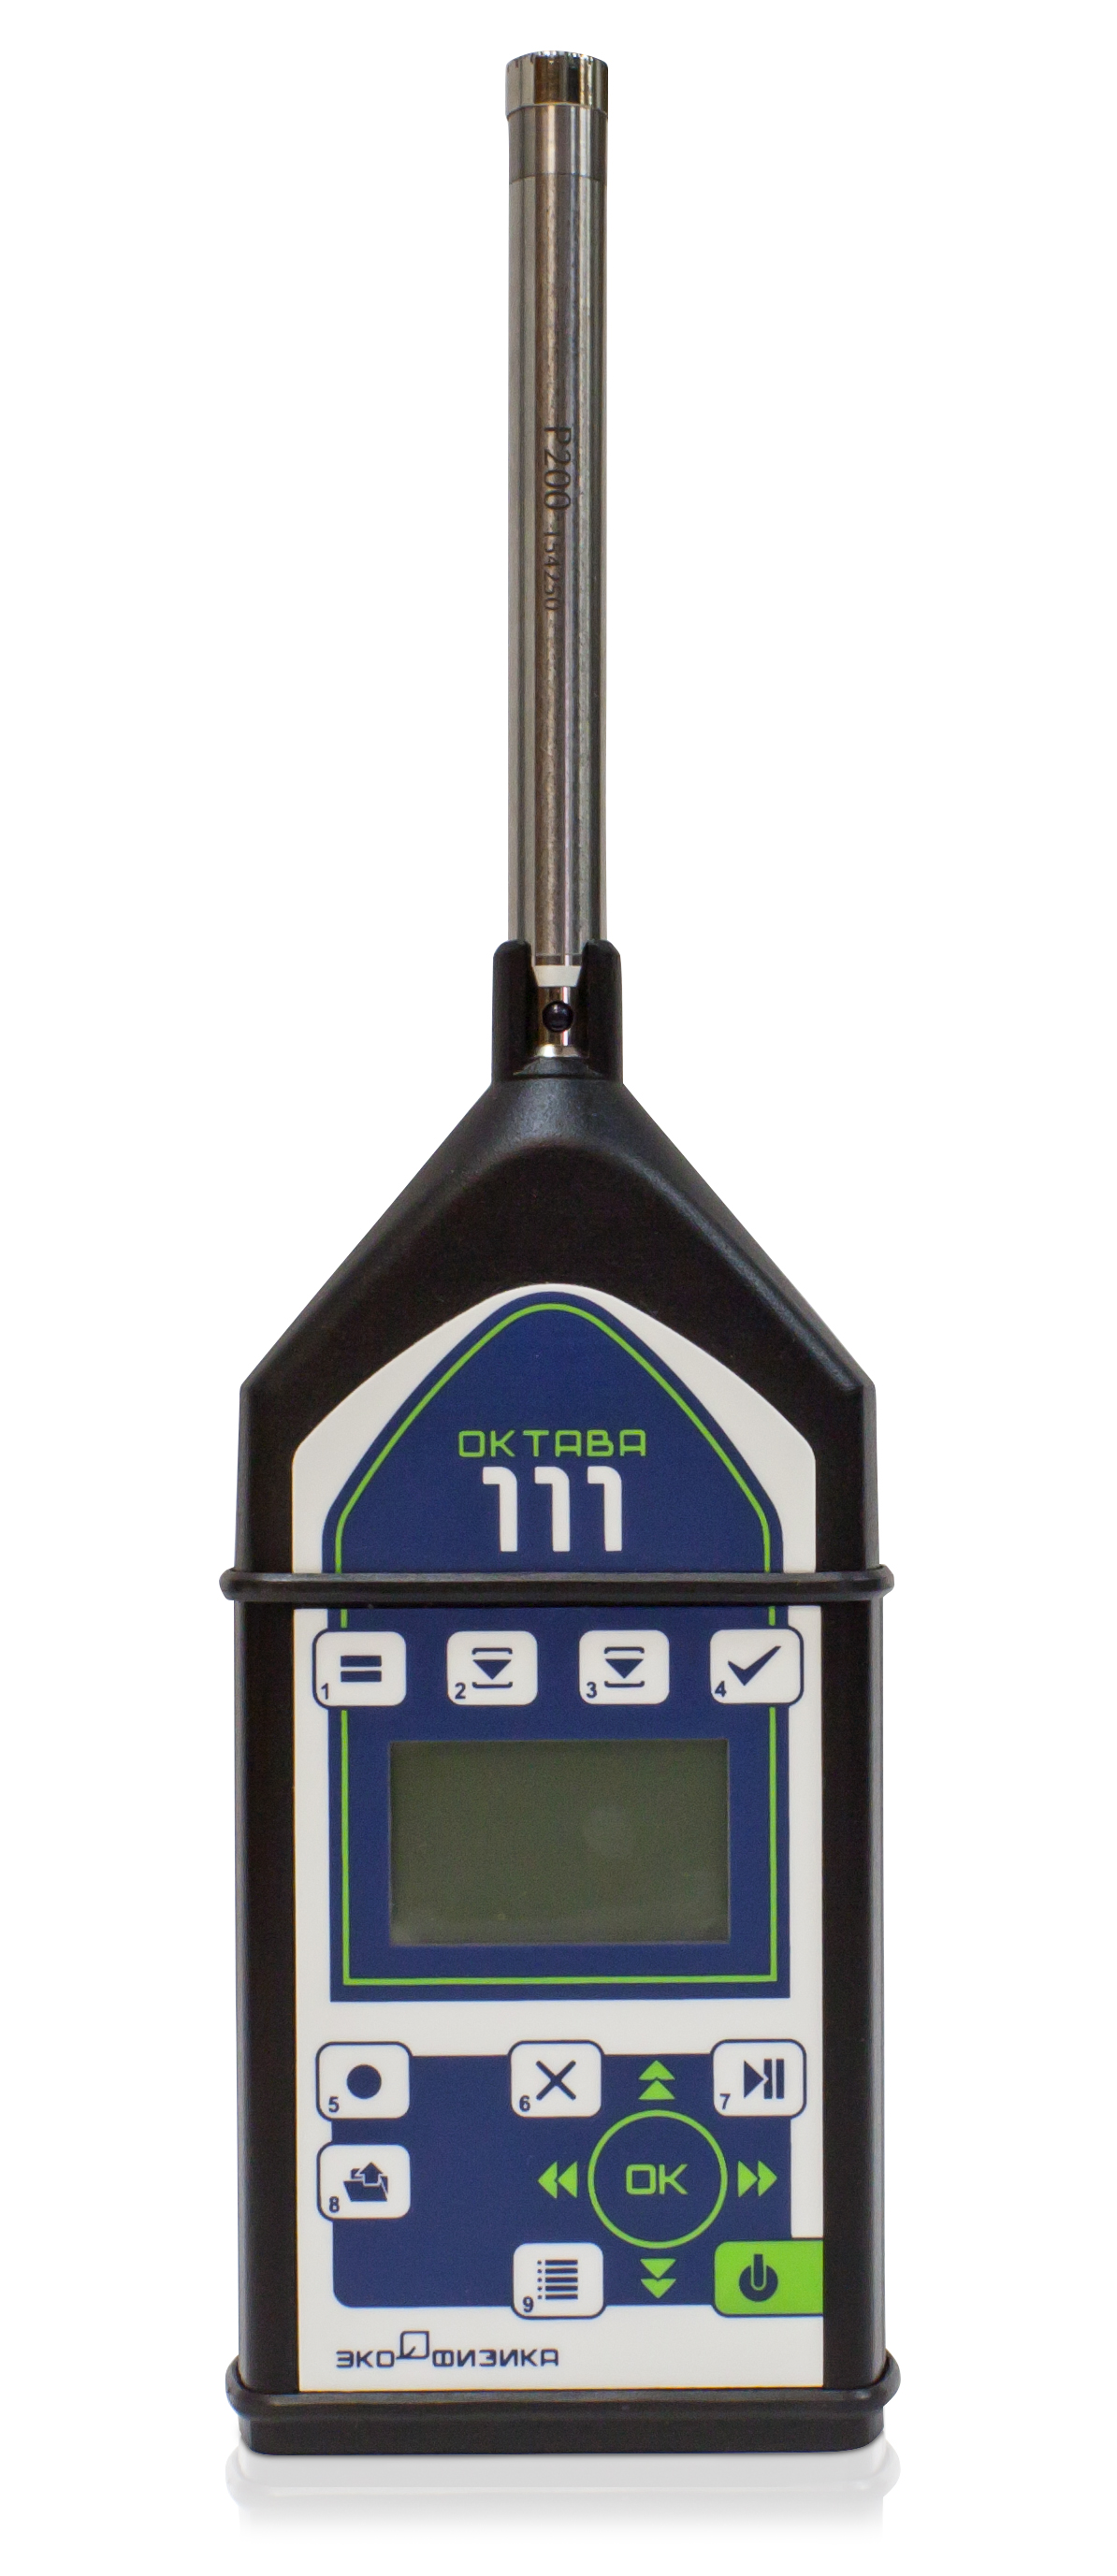 OCTAVE-111 Noise meter, spectrum analyzer